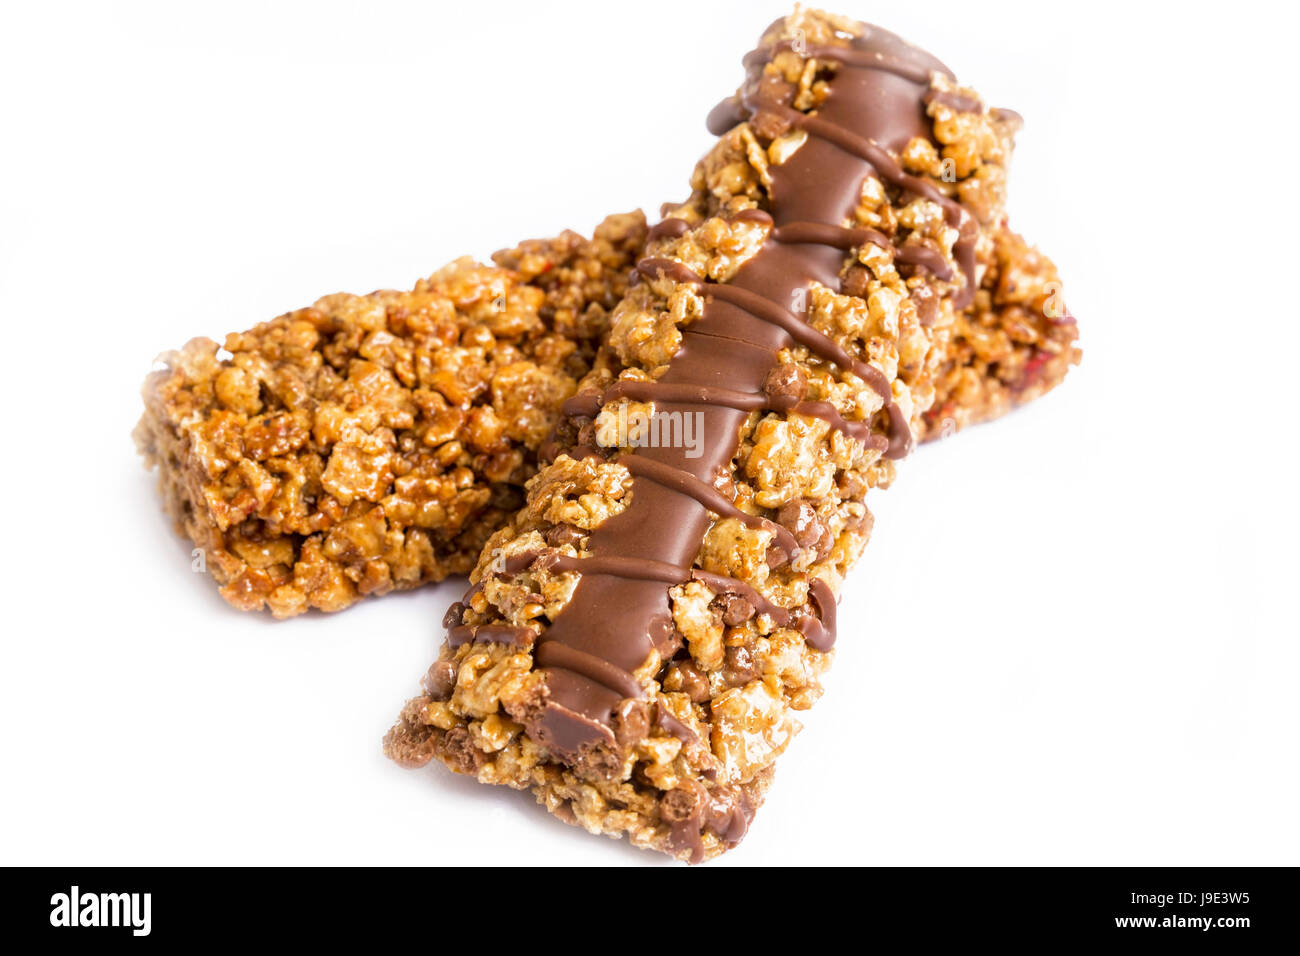 Granola or muesli bars with chocolate isolated on white Stock Photo